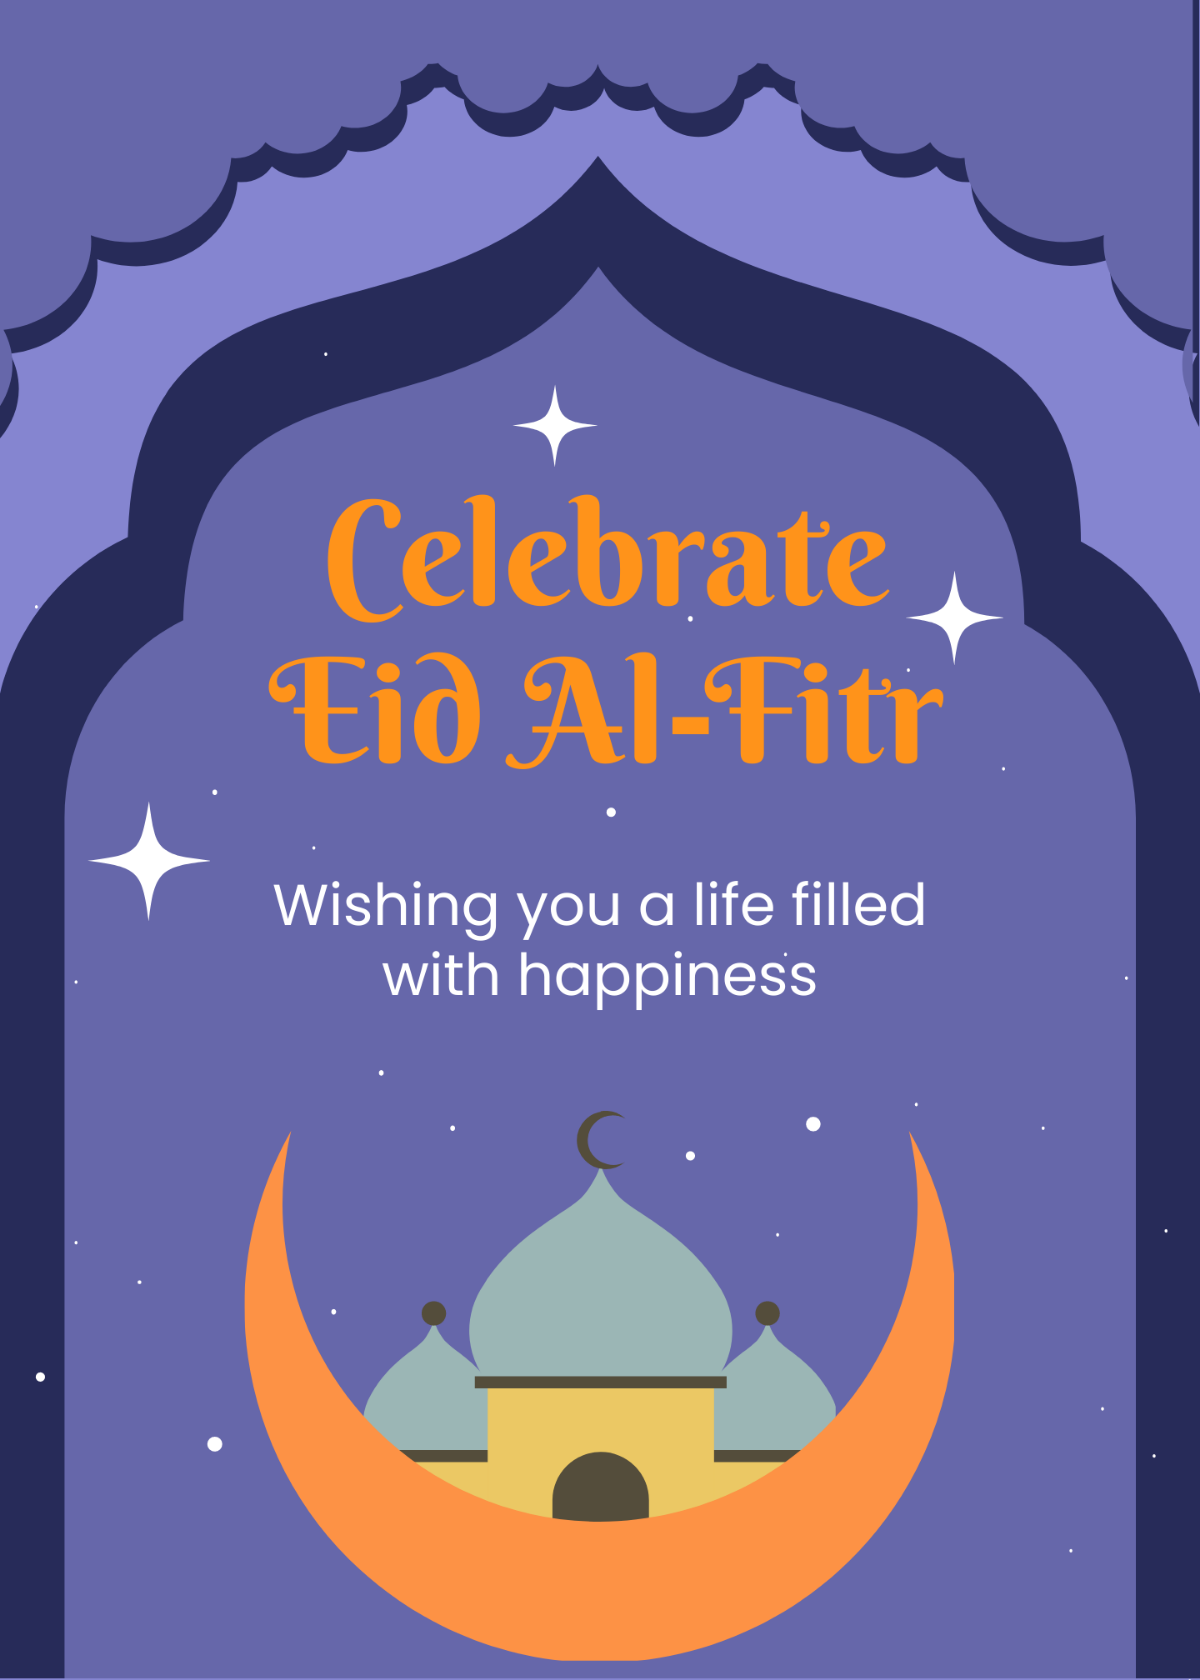 Eid al-Fitr Day Greeting Card Template